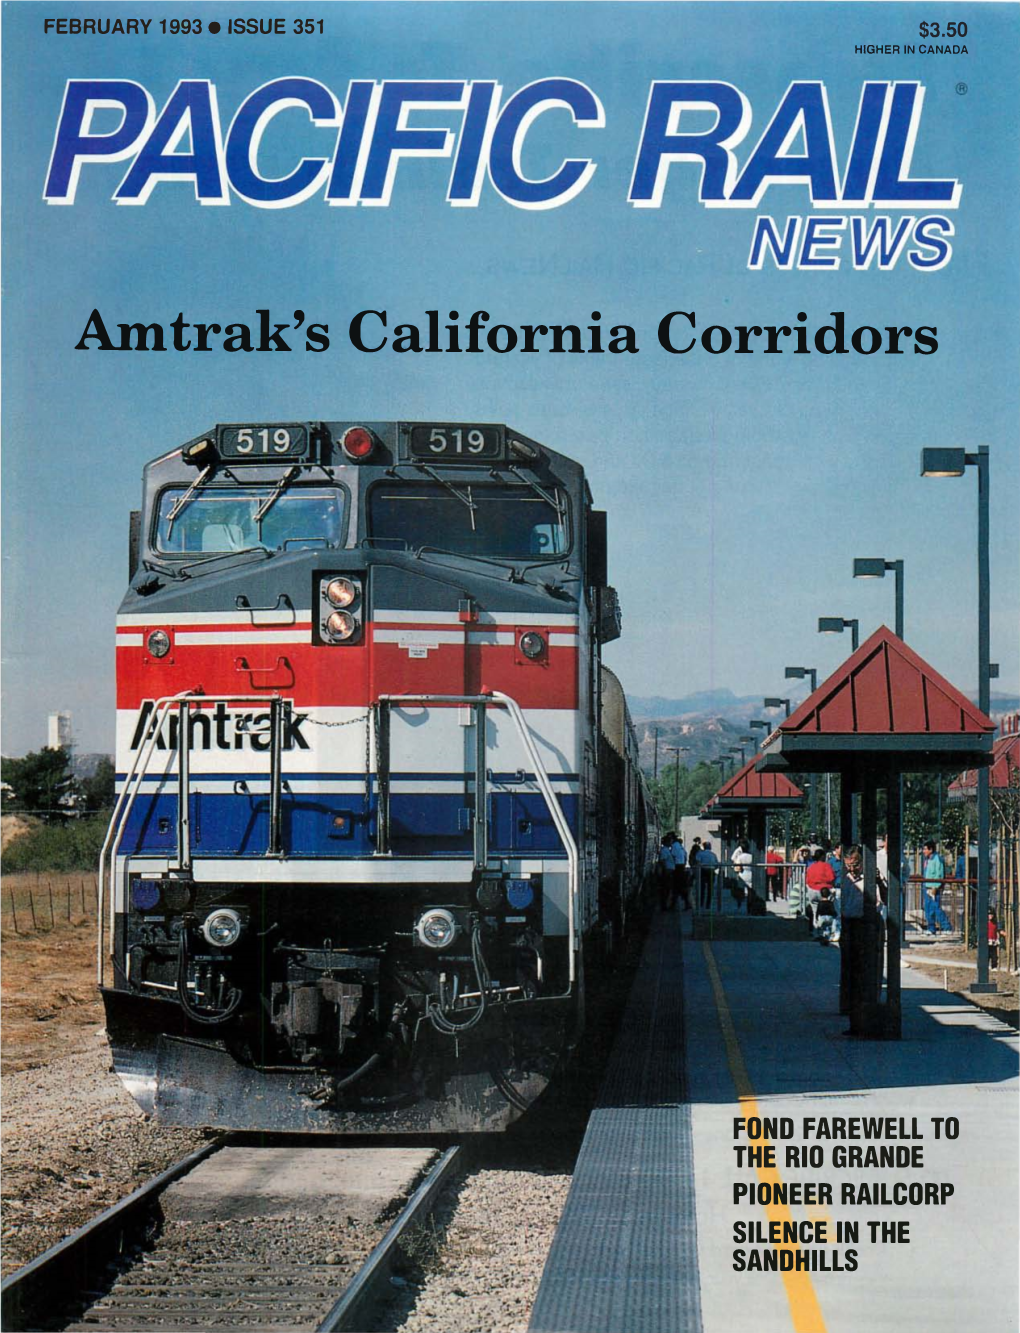 Amtrak's California Corridors